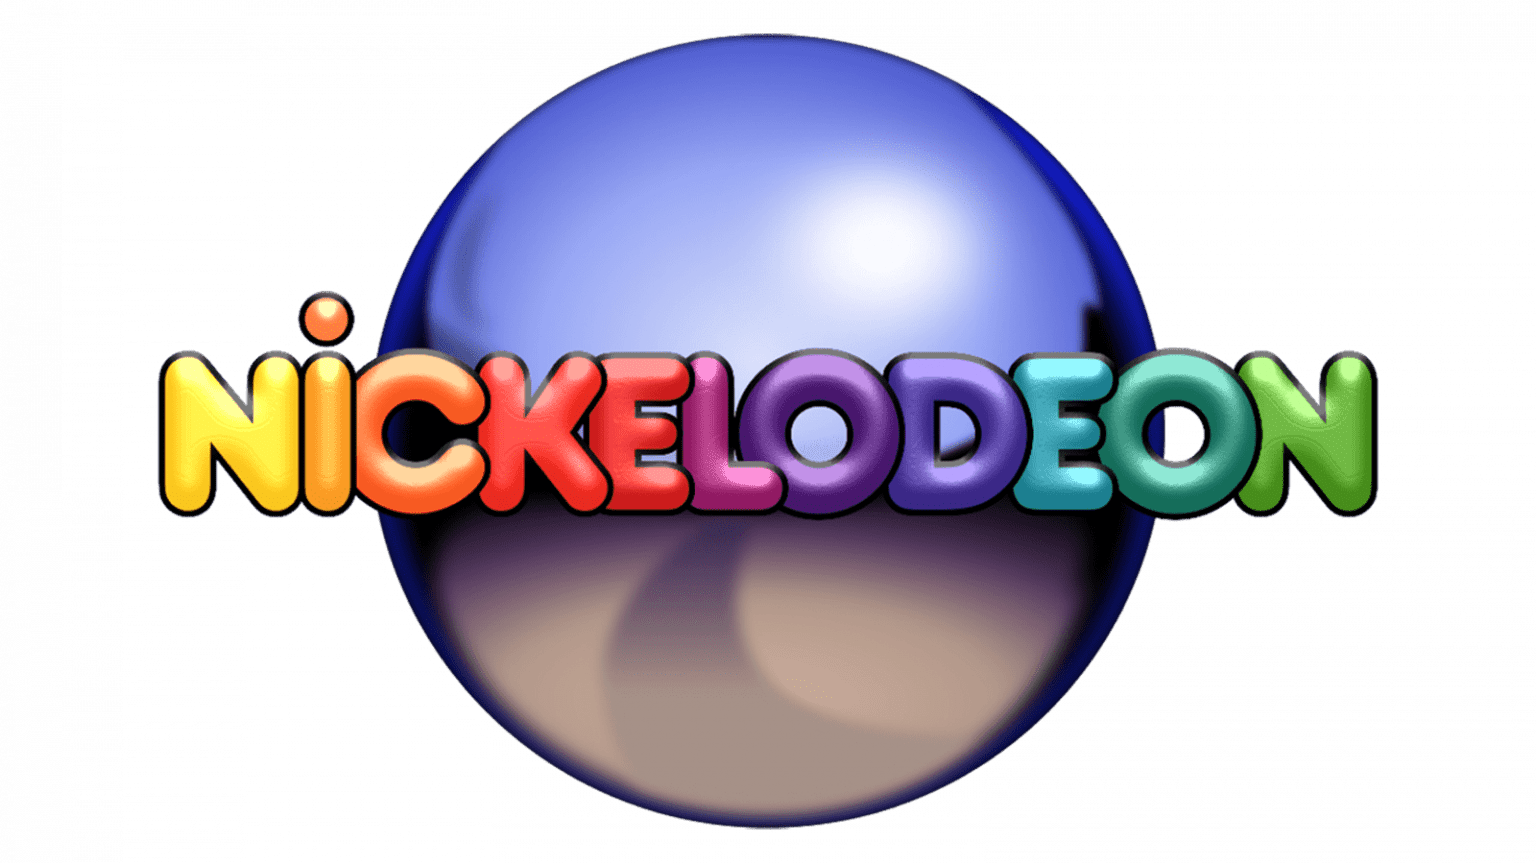 Nickelodeon logo. Nickelodeon logo 1981. Никелодеон первый логотип. Никелодеон шар. Nickelodeon Kids 1981.